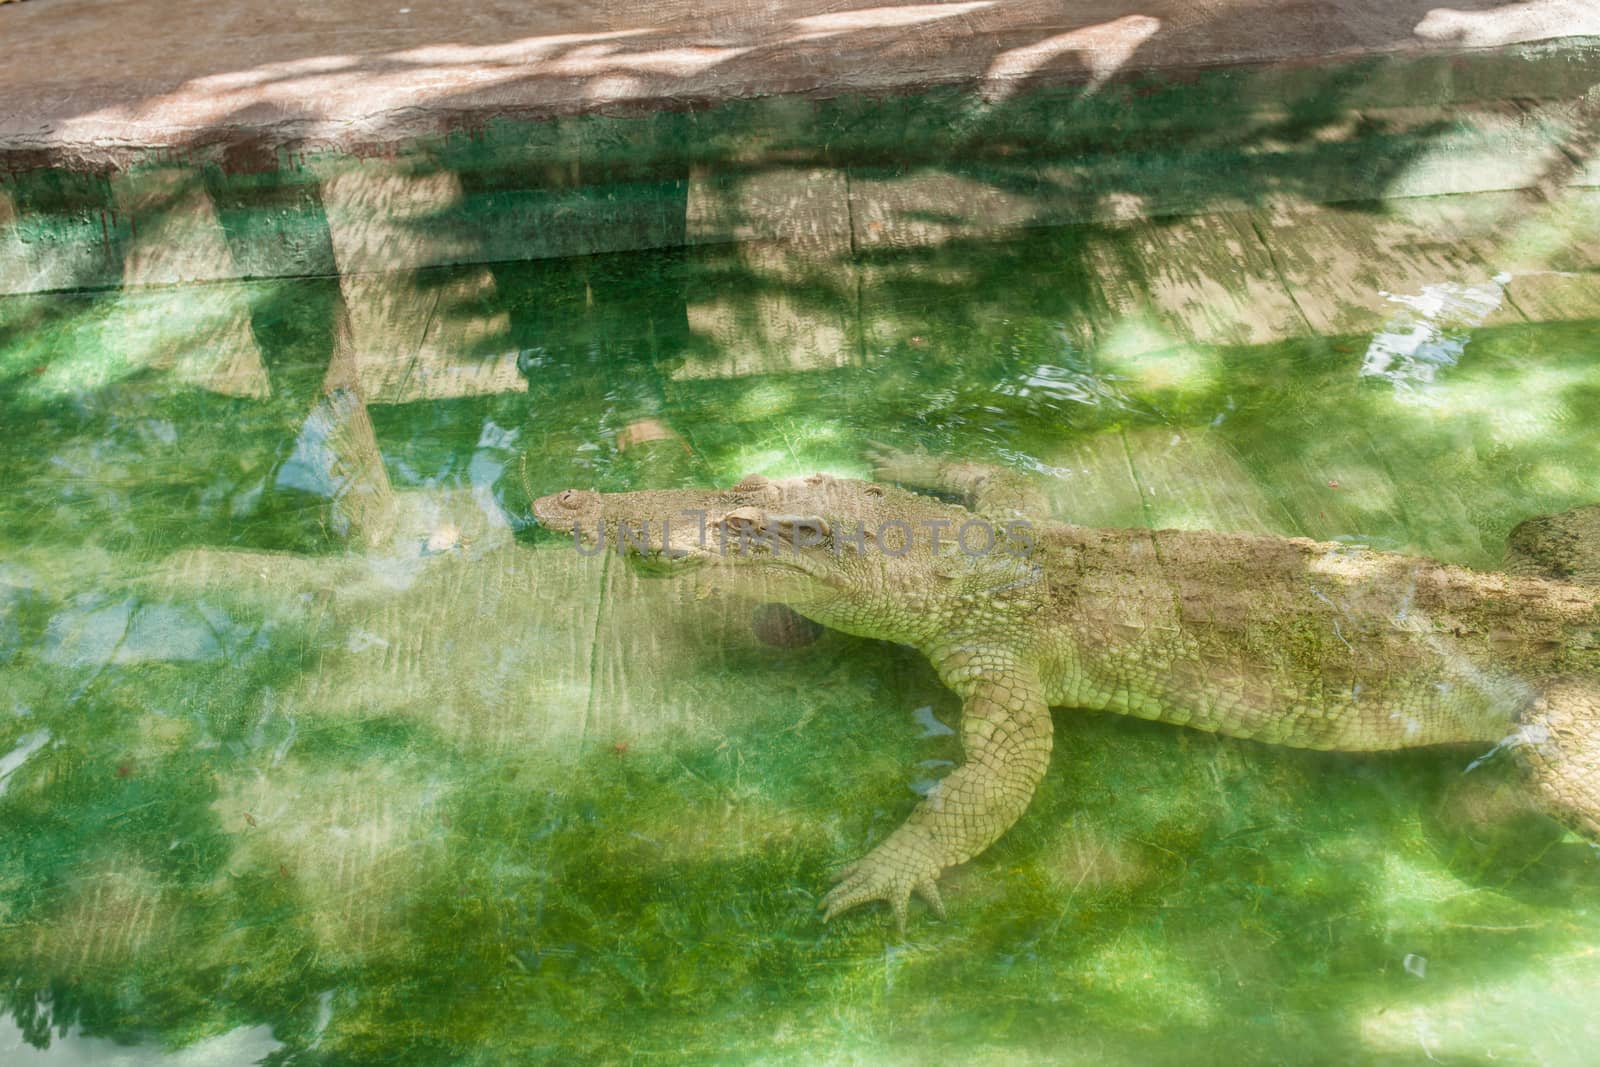 Albino Crocodile sleeping in water at zoo. Albino,Crocodile by nopparats